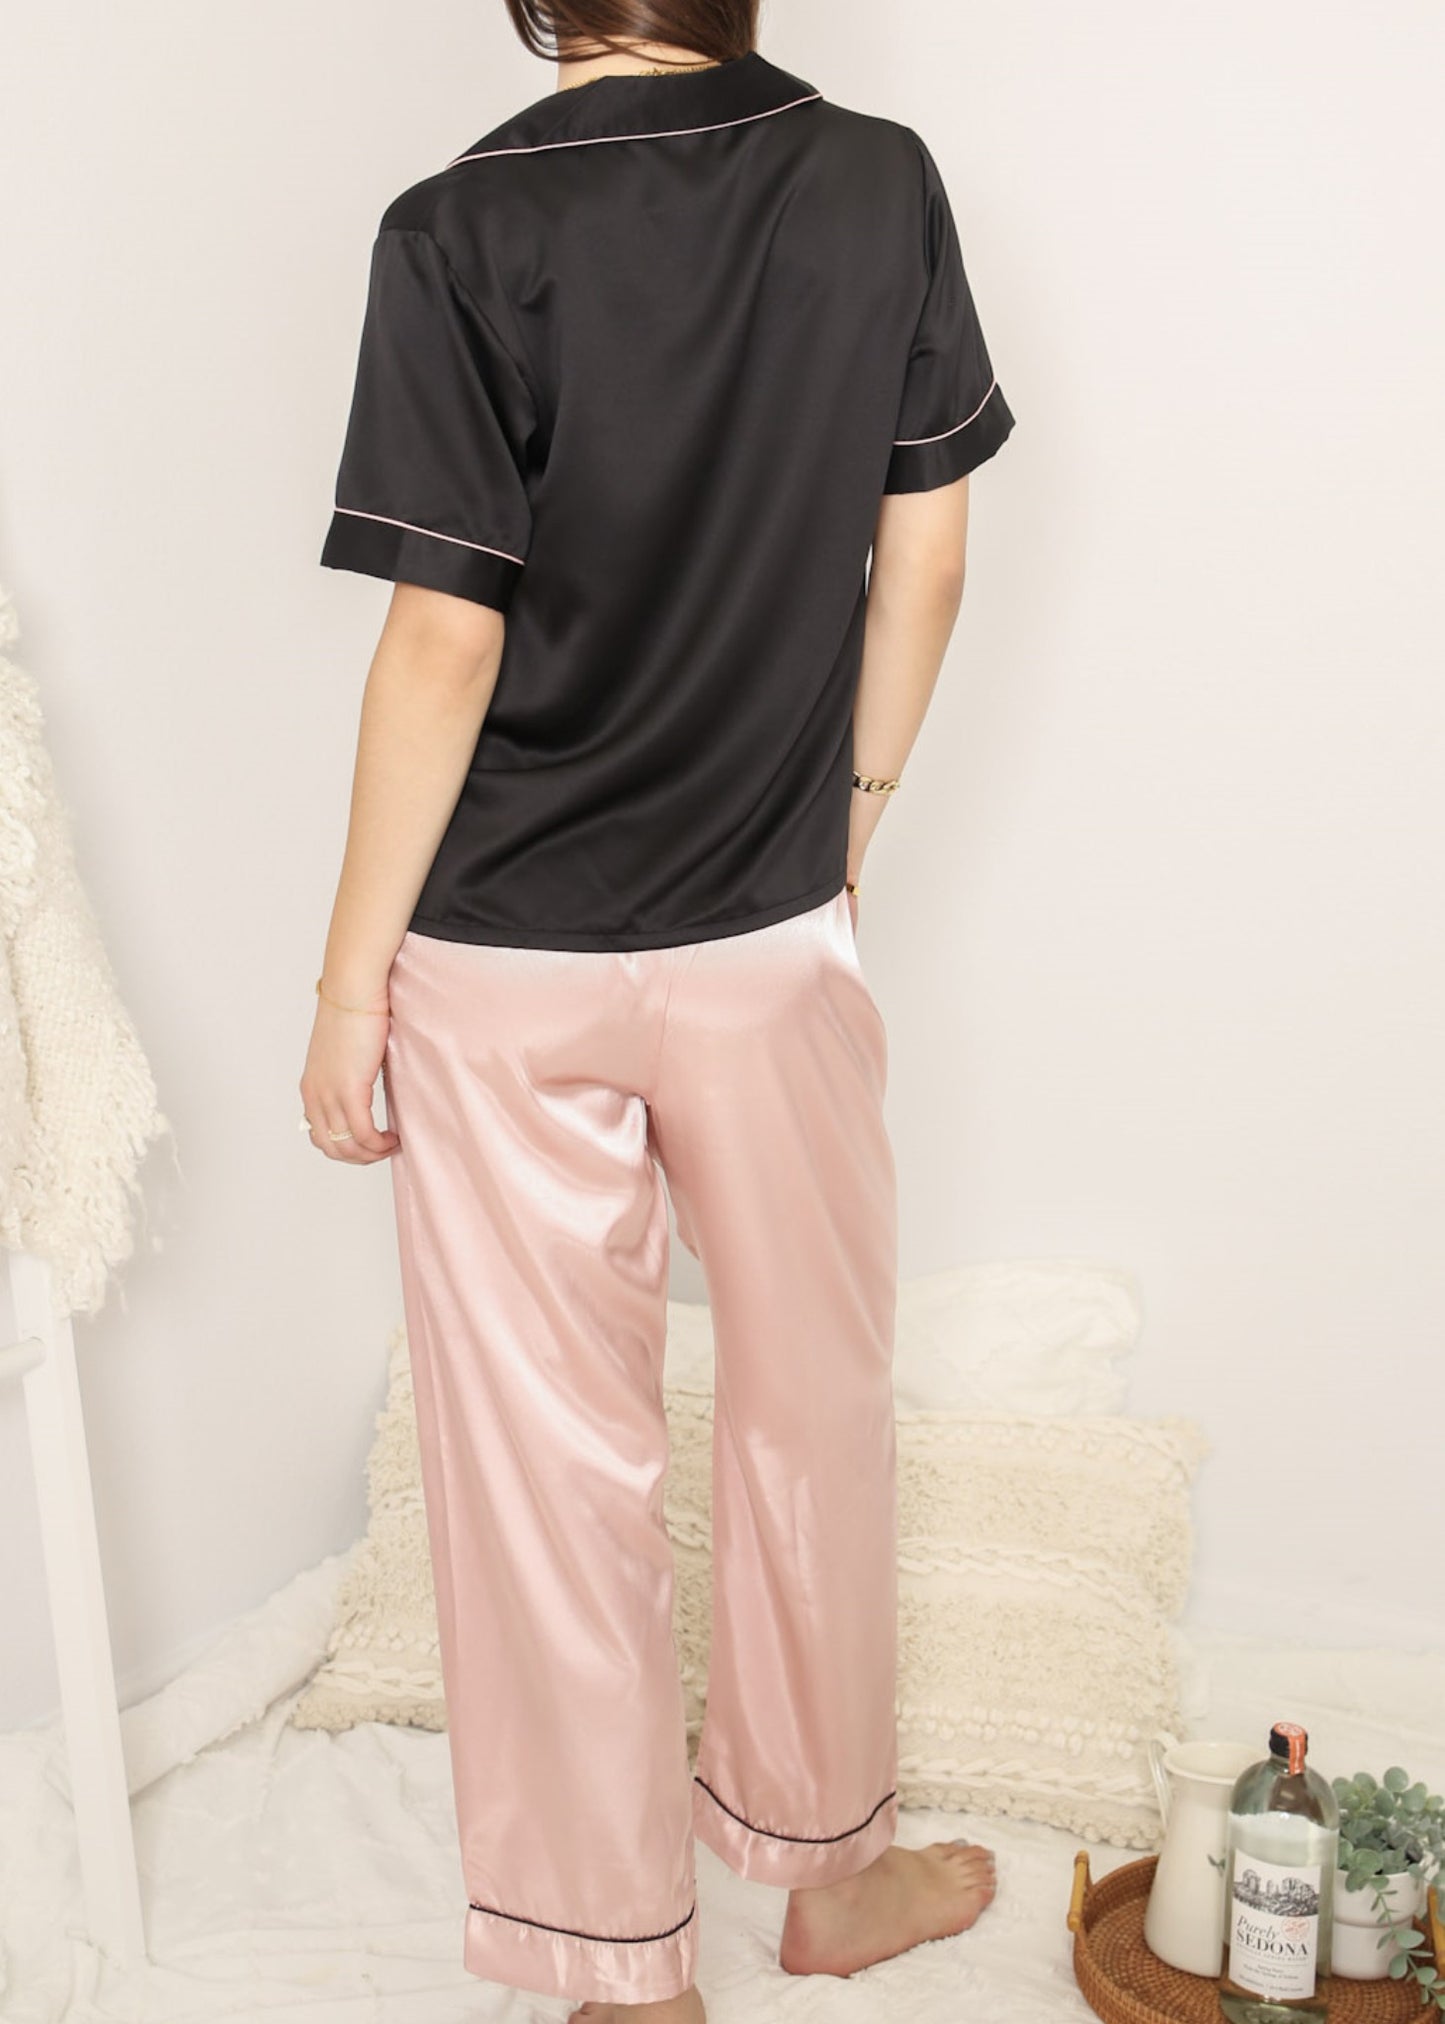 Black and Pink Loungewear 4 Piece Set